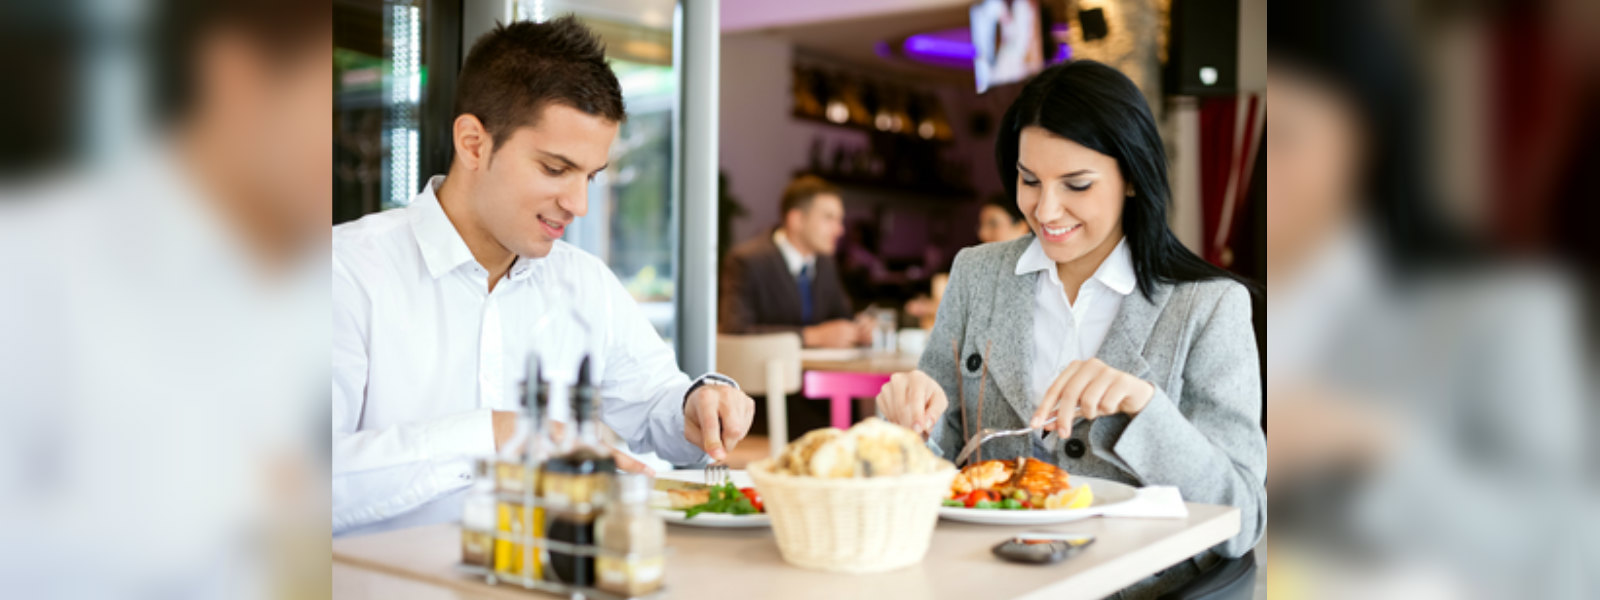 Common dining etiquettes that you should follow 